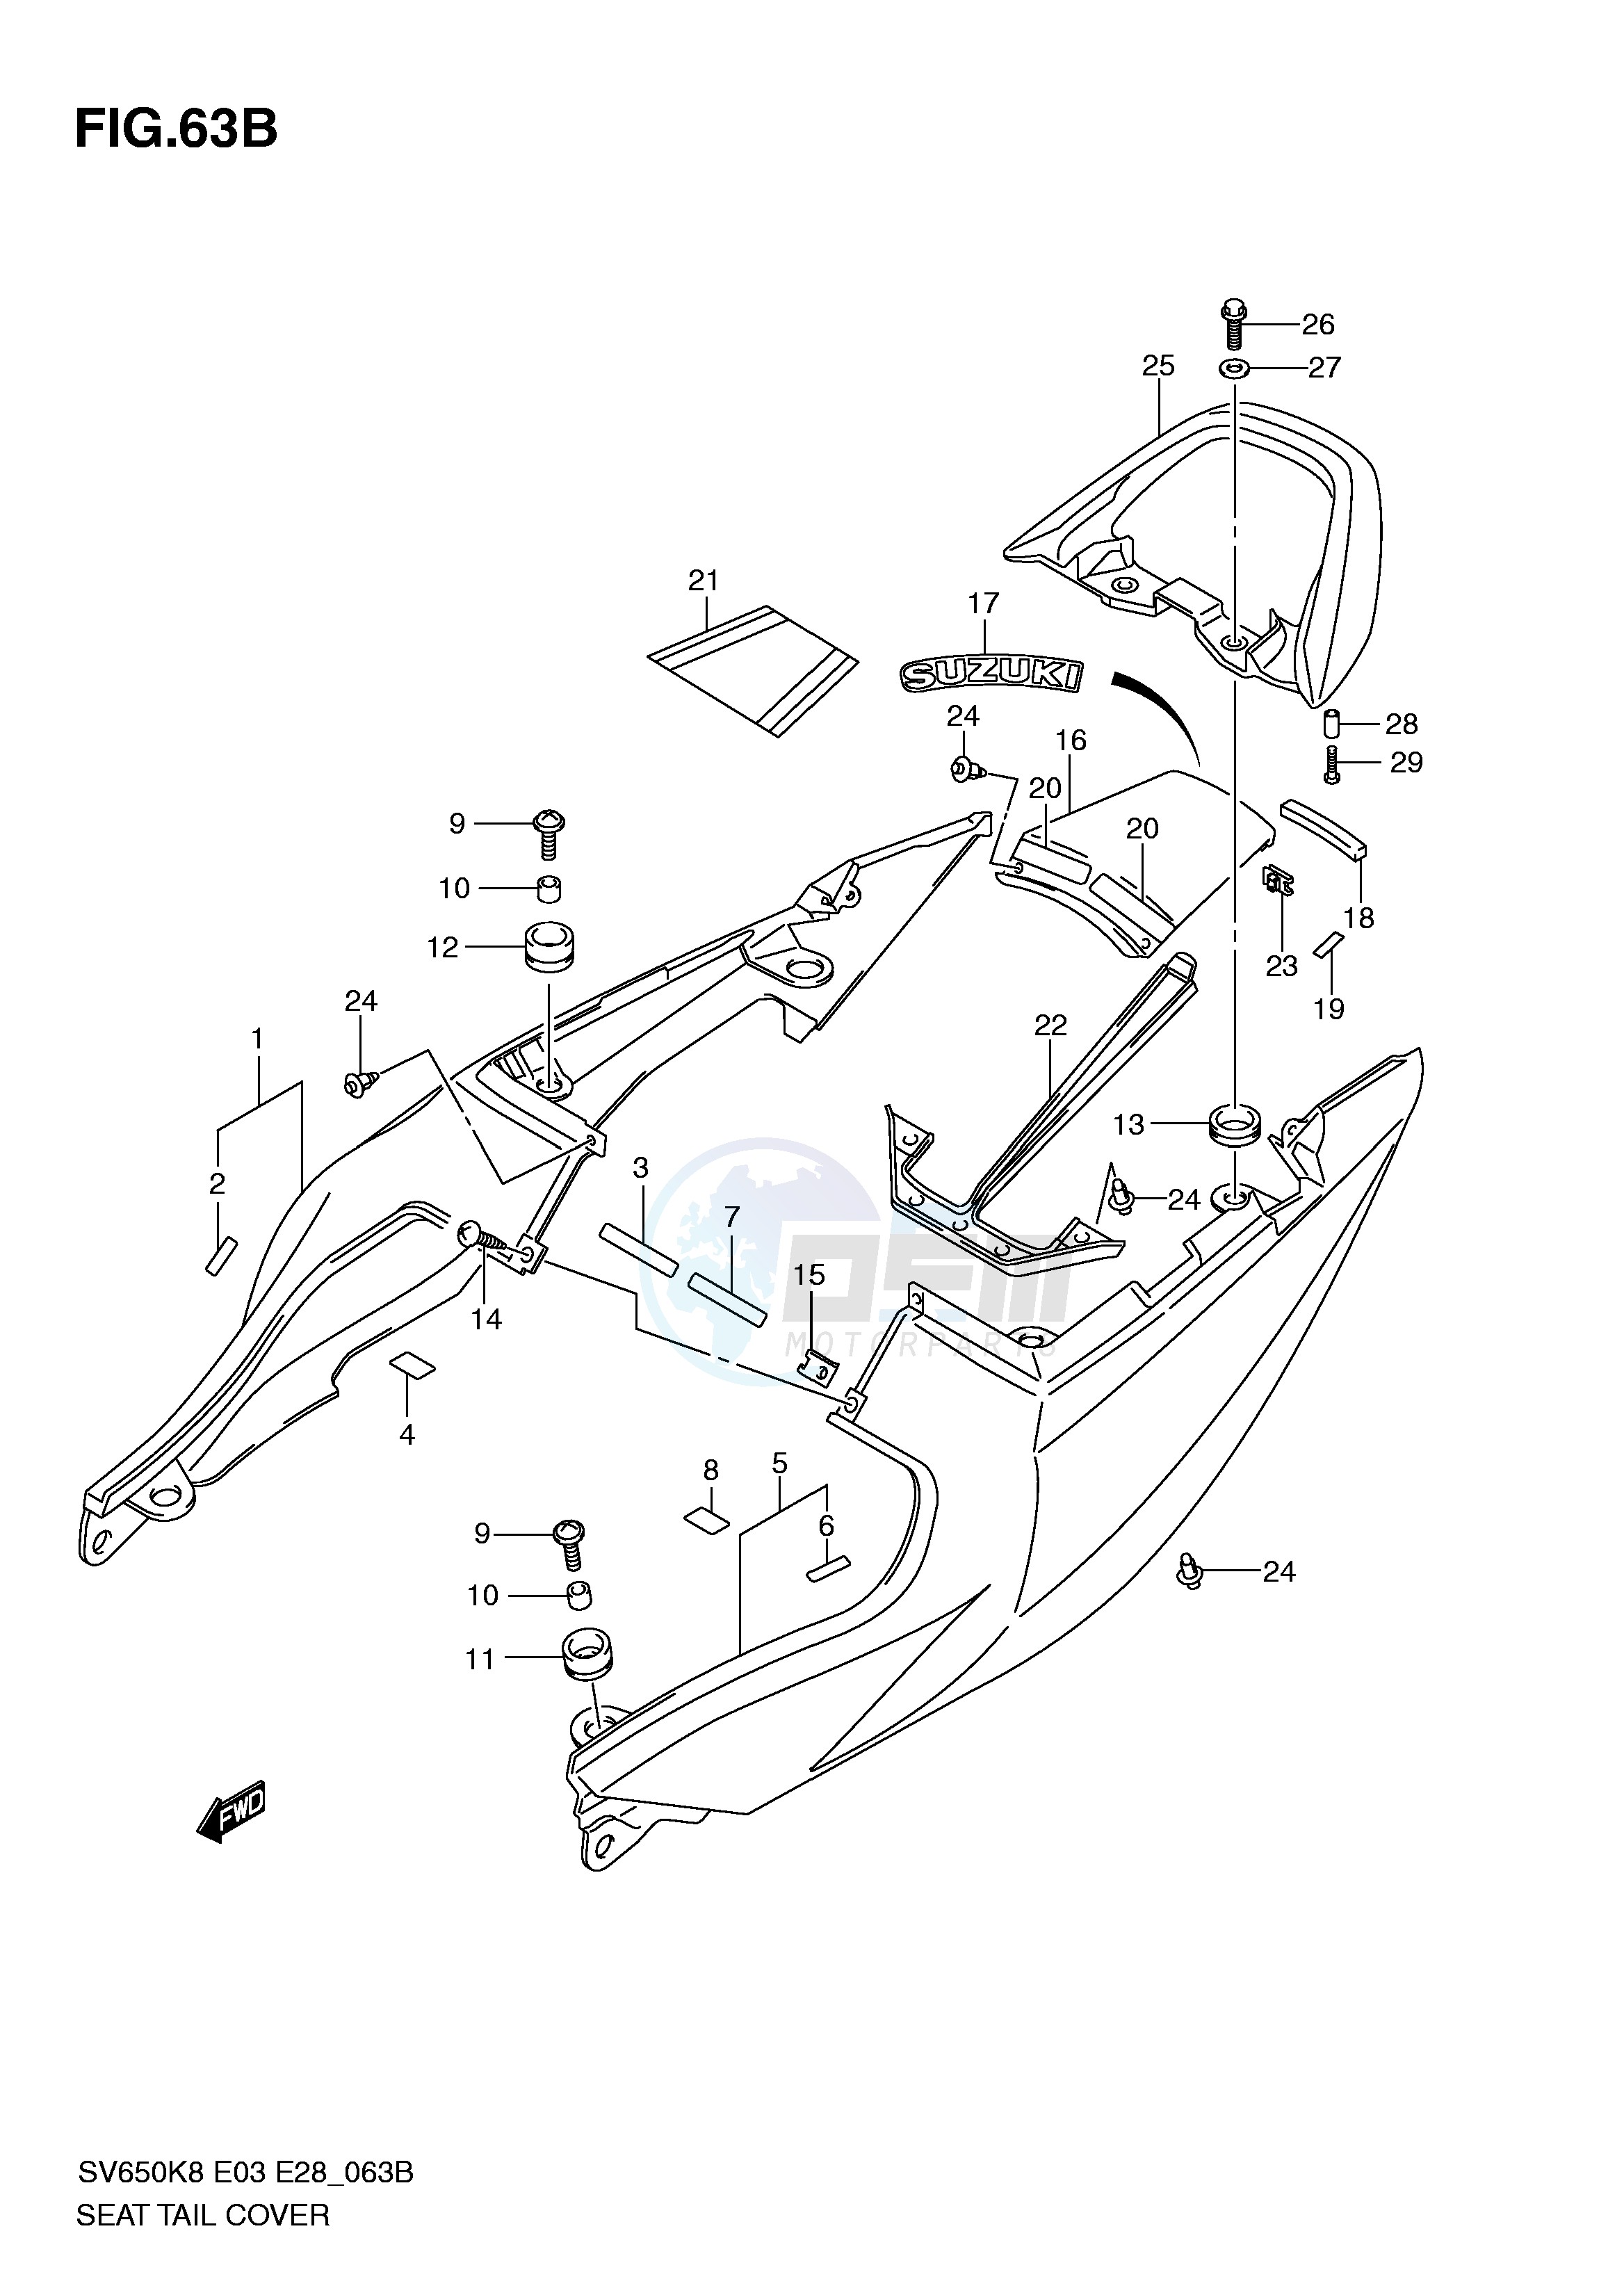 SEAT TAIL COVER (SV650SL0 SAL0) blueprint